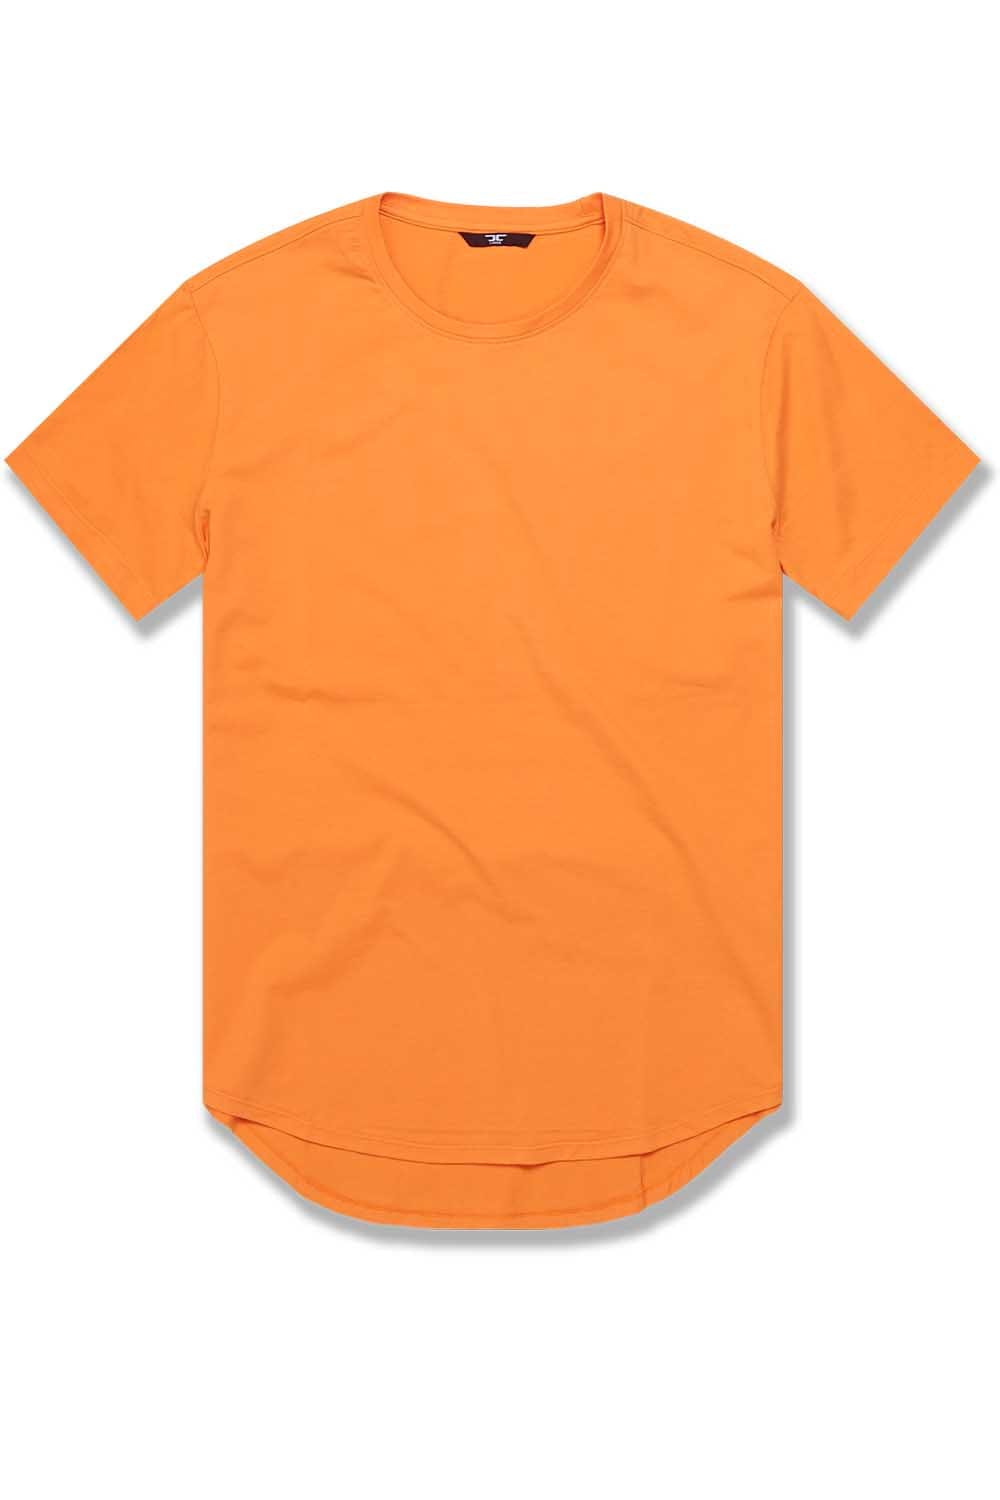 JC Big Men Big Men's Scallop T-Shirt (Name Your Price) Princeton / 4XL